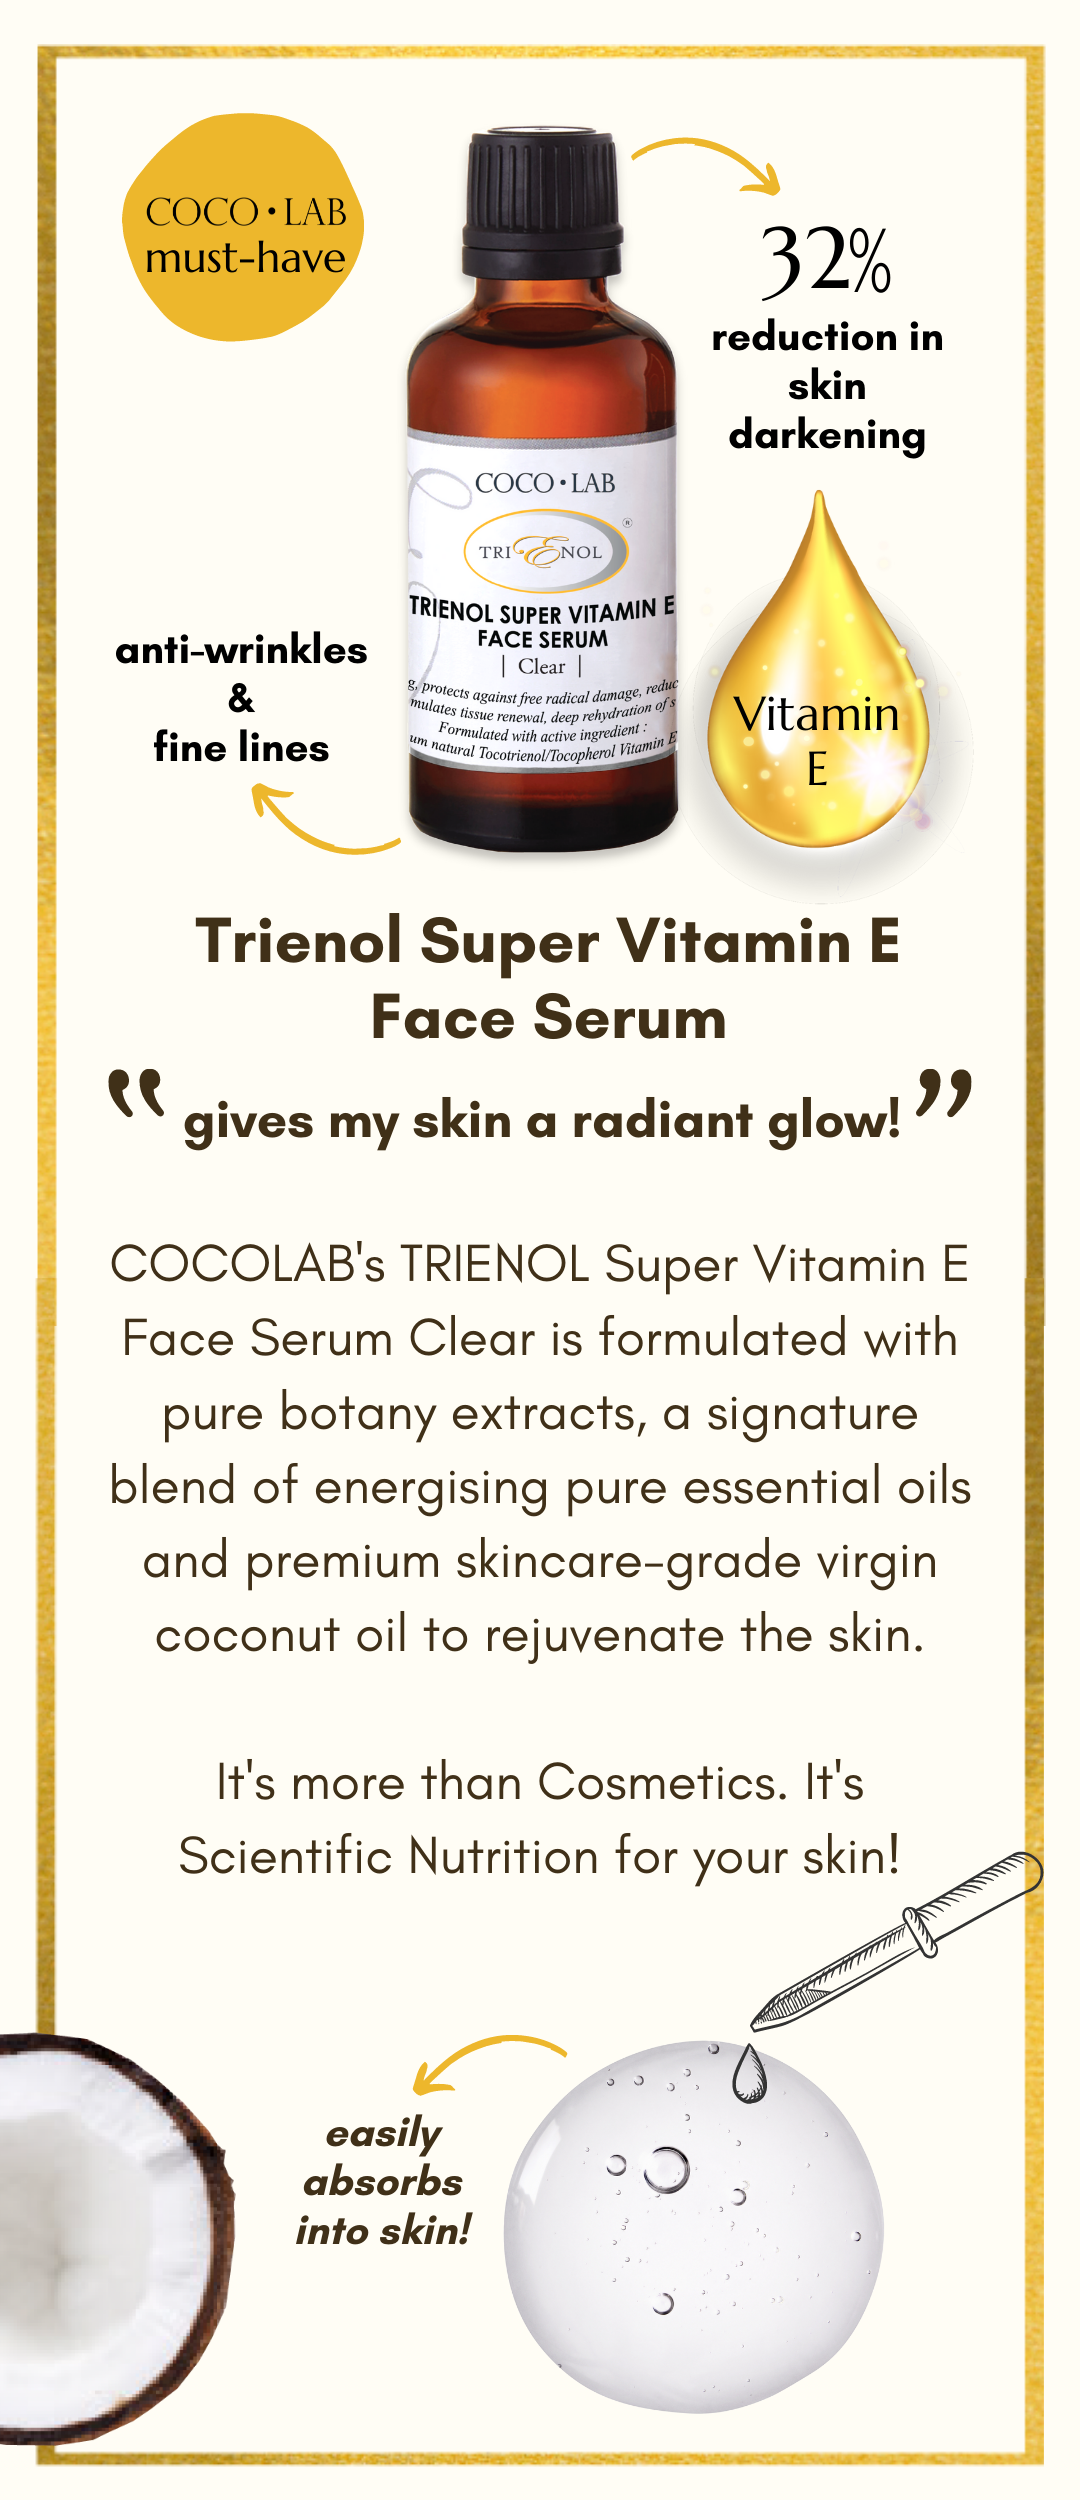 COCOLAB Trienol Super Vitamin E Face Serum Clear